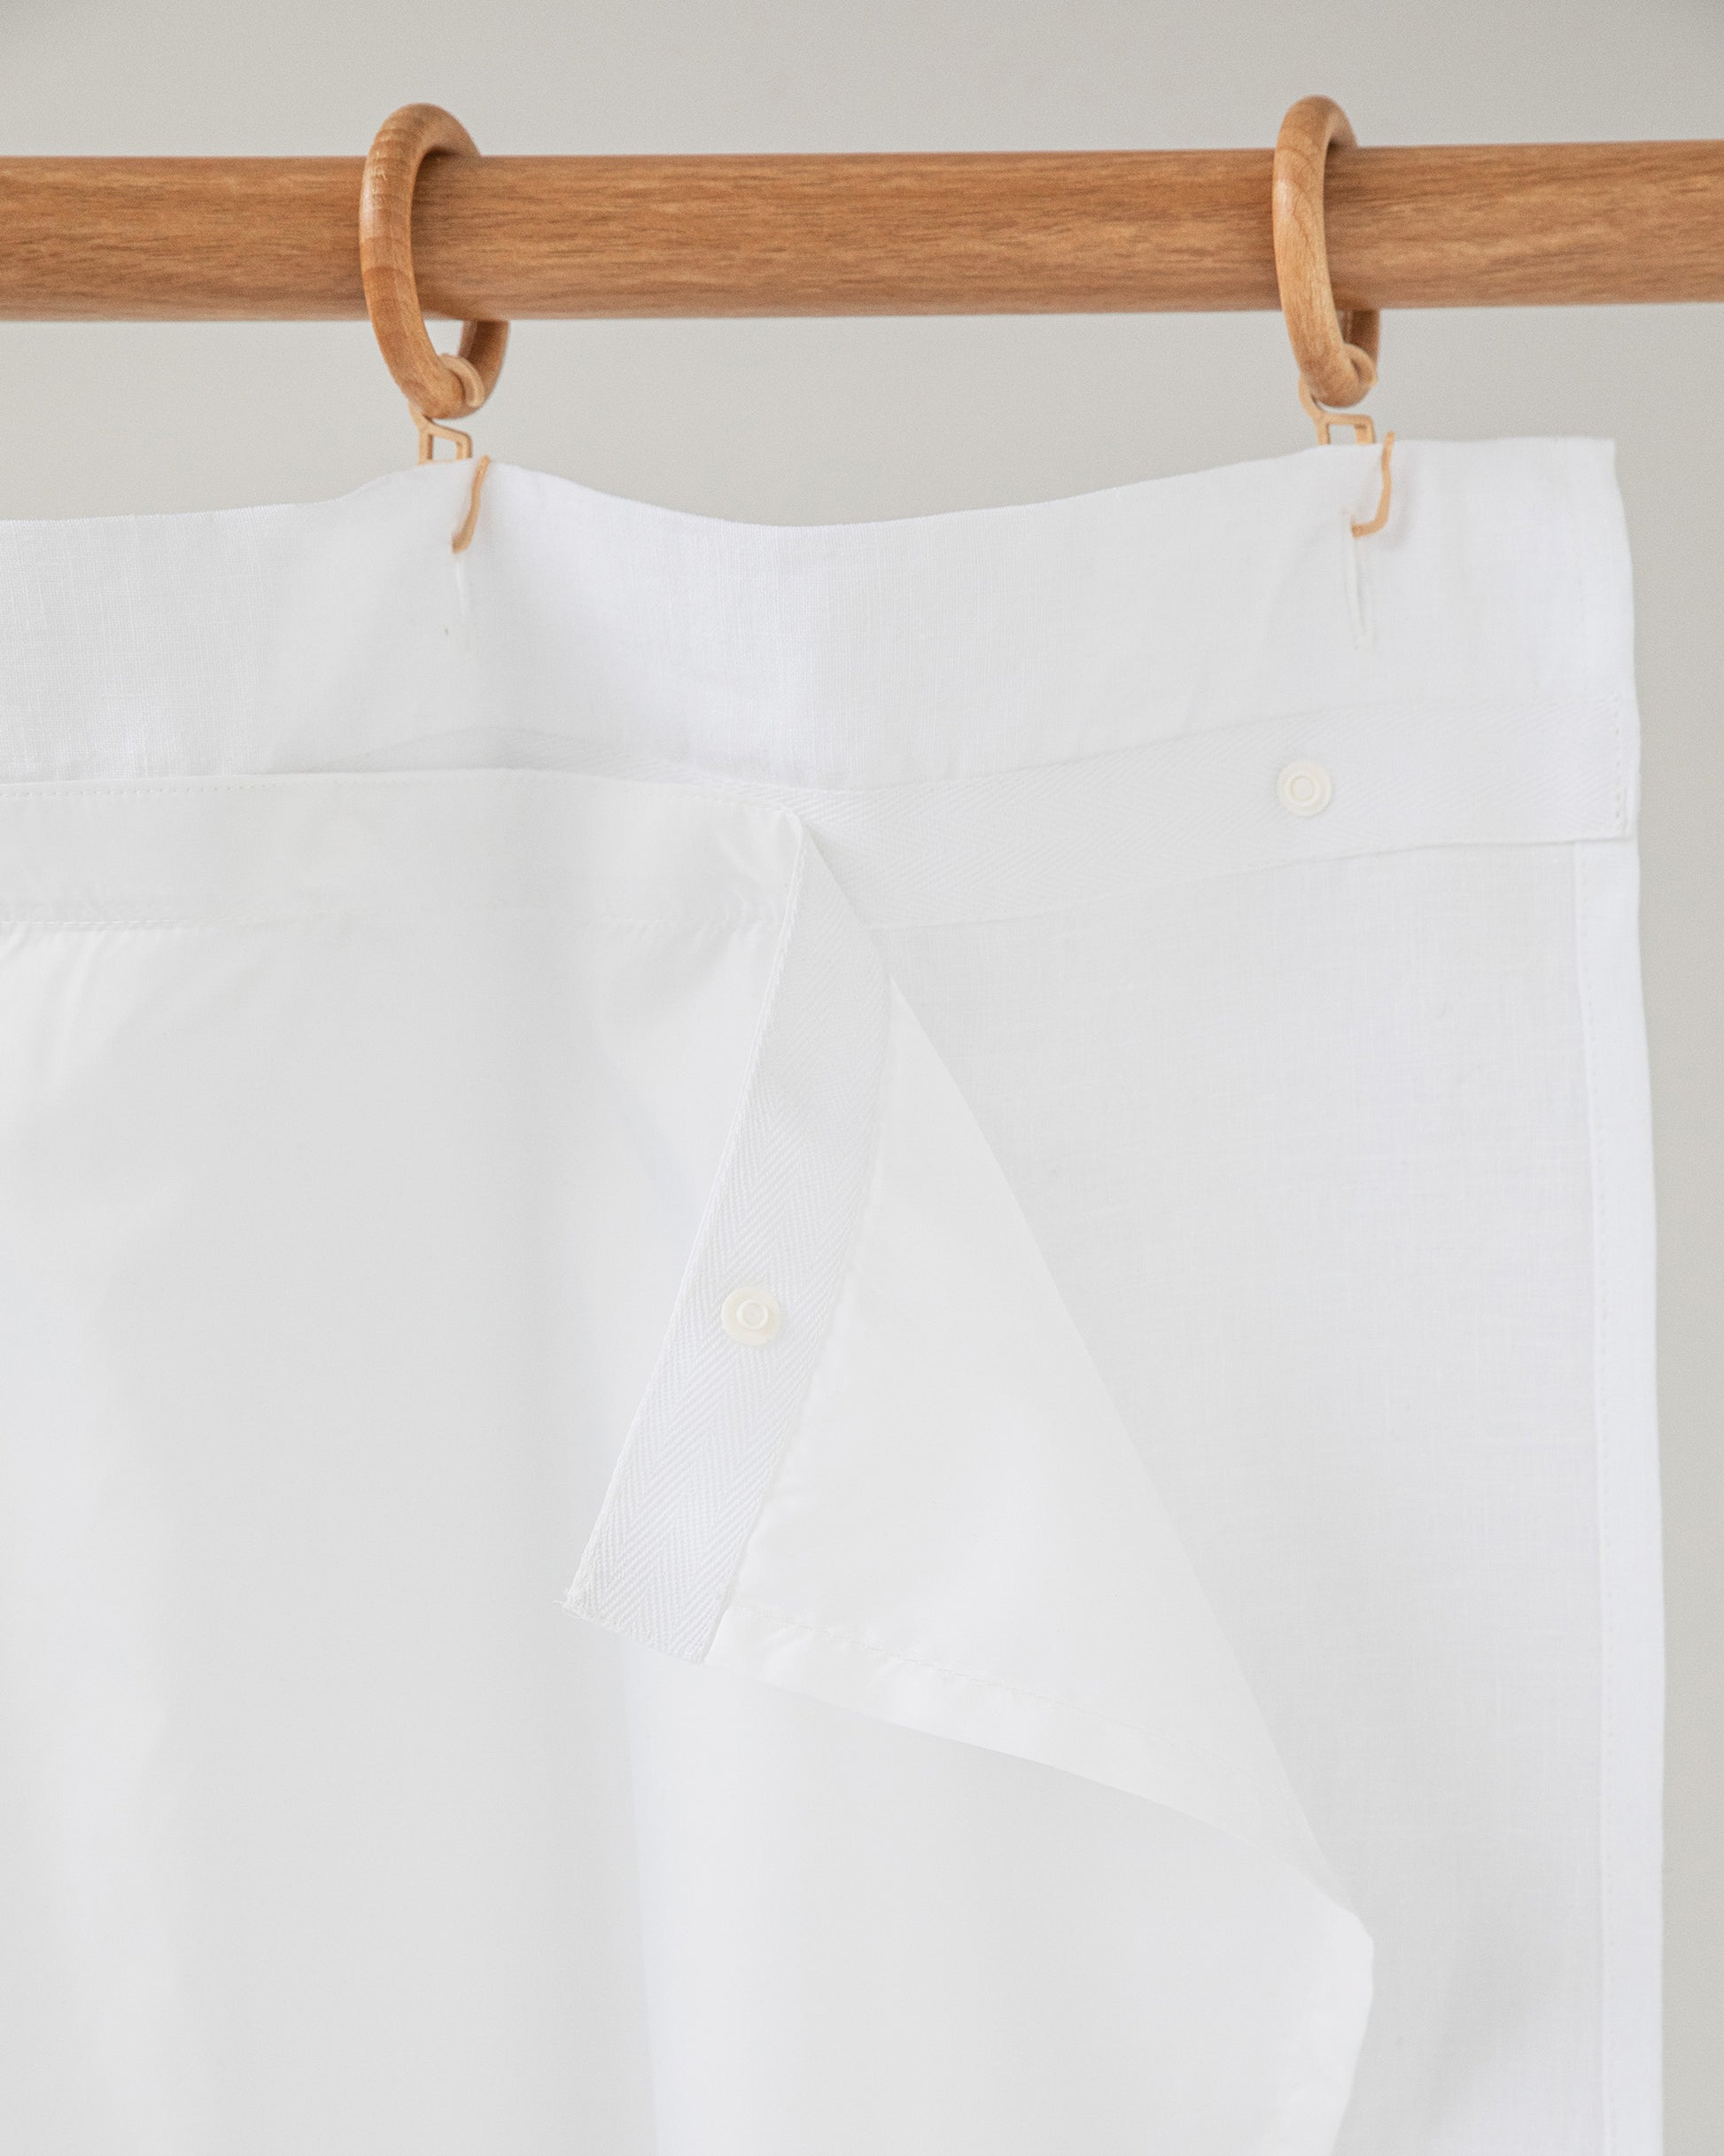 Waterproof linen shower curtain (1 pcs) in White - MagicLinen